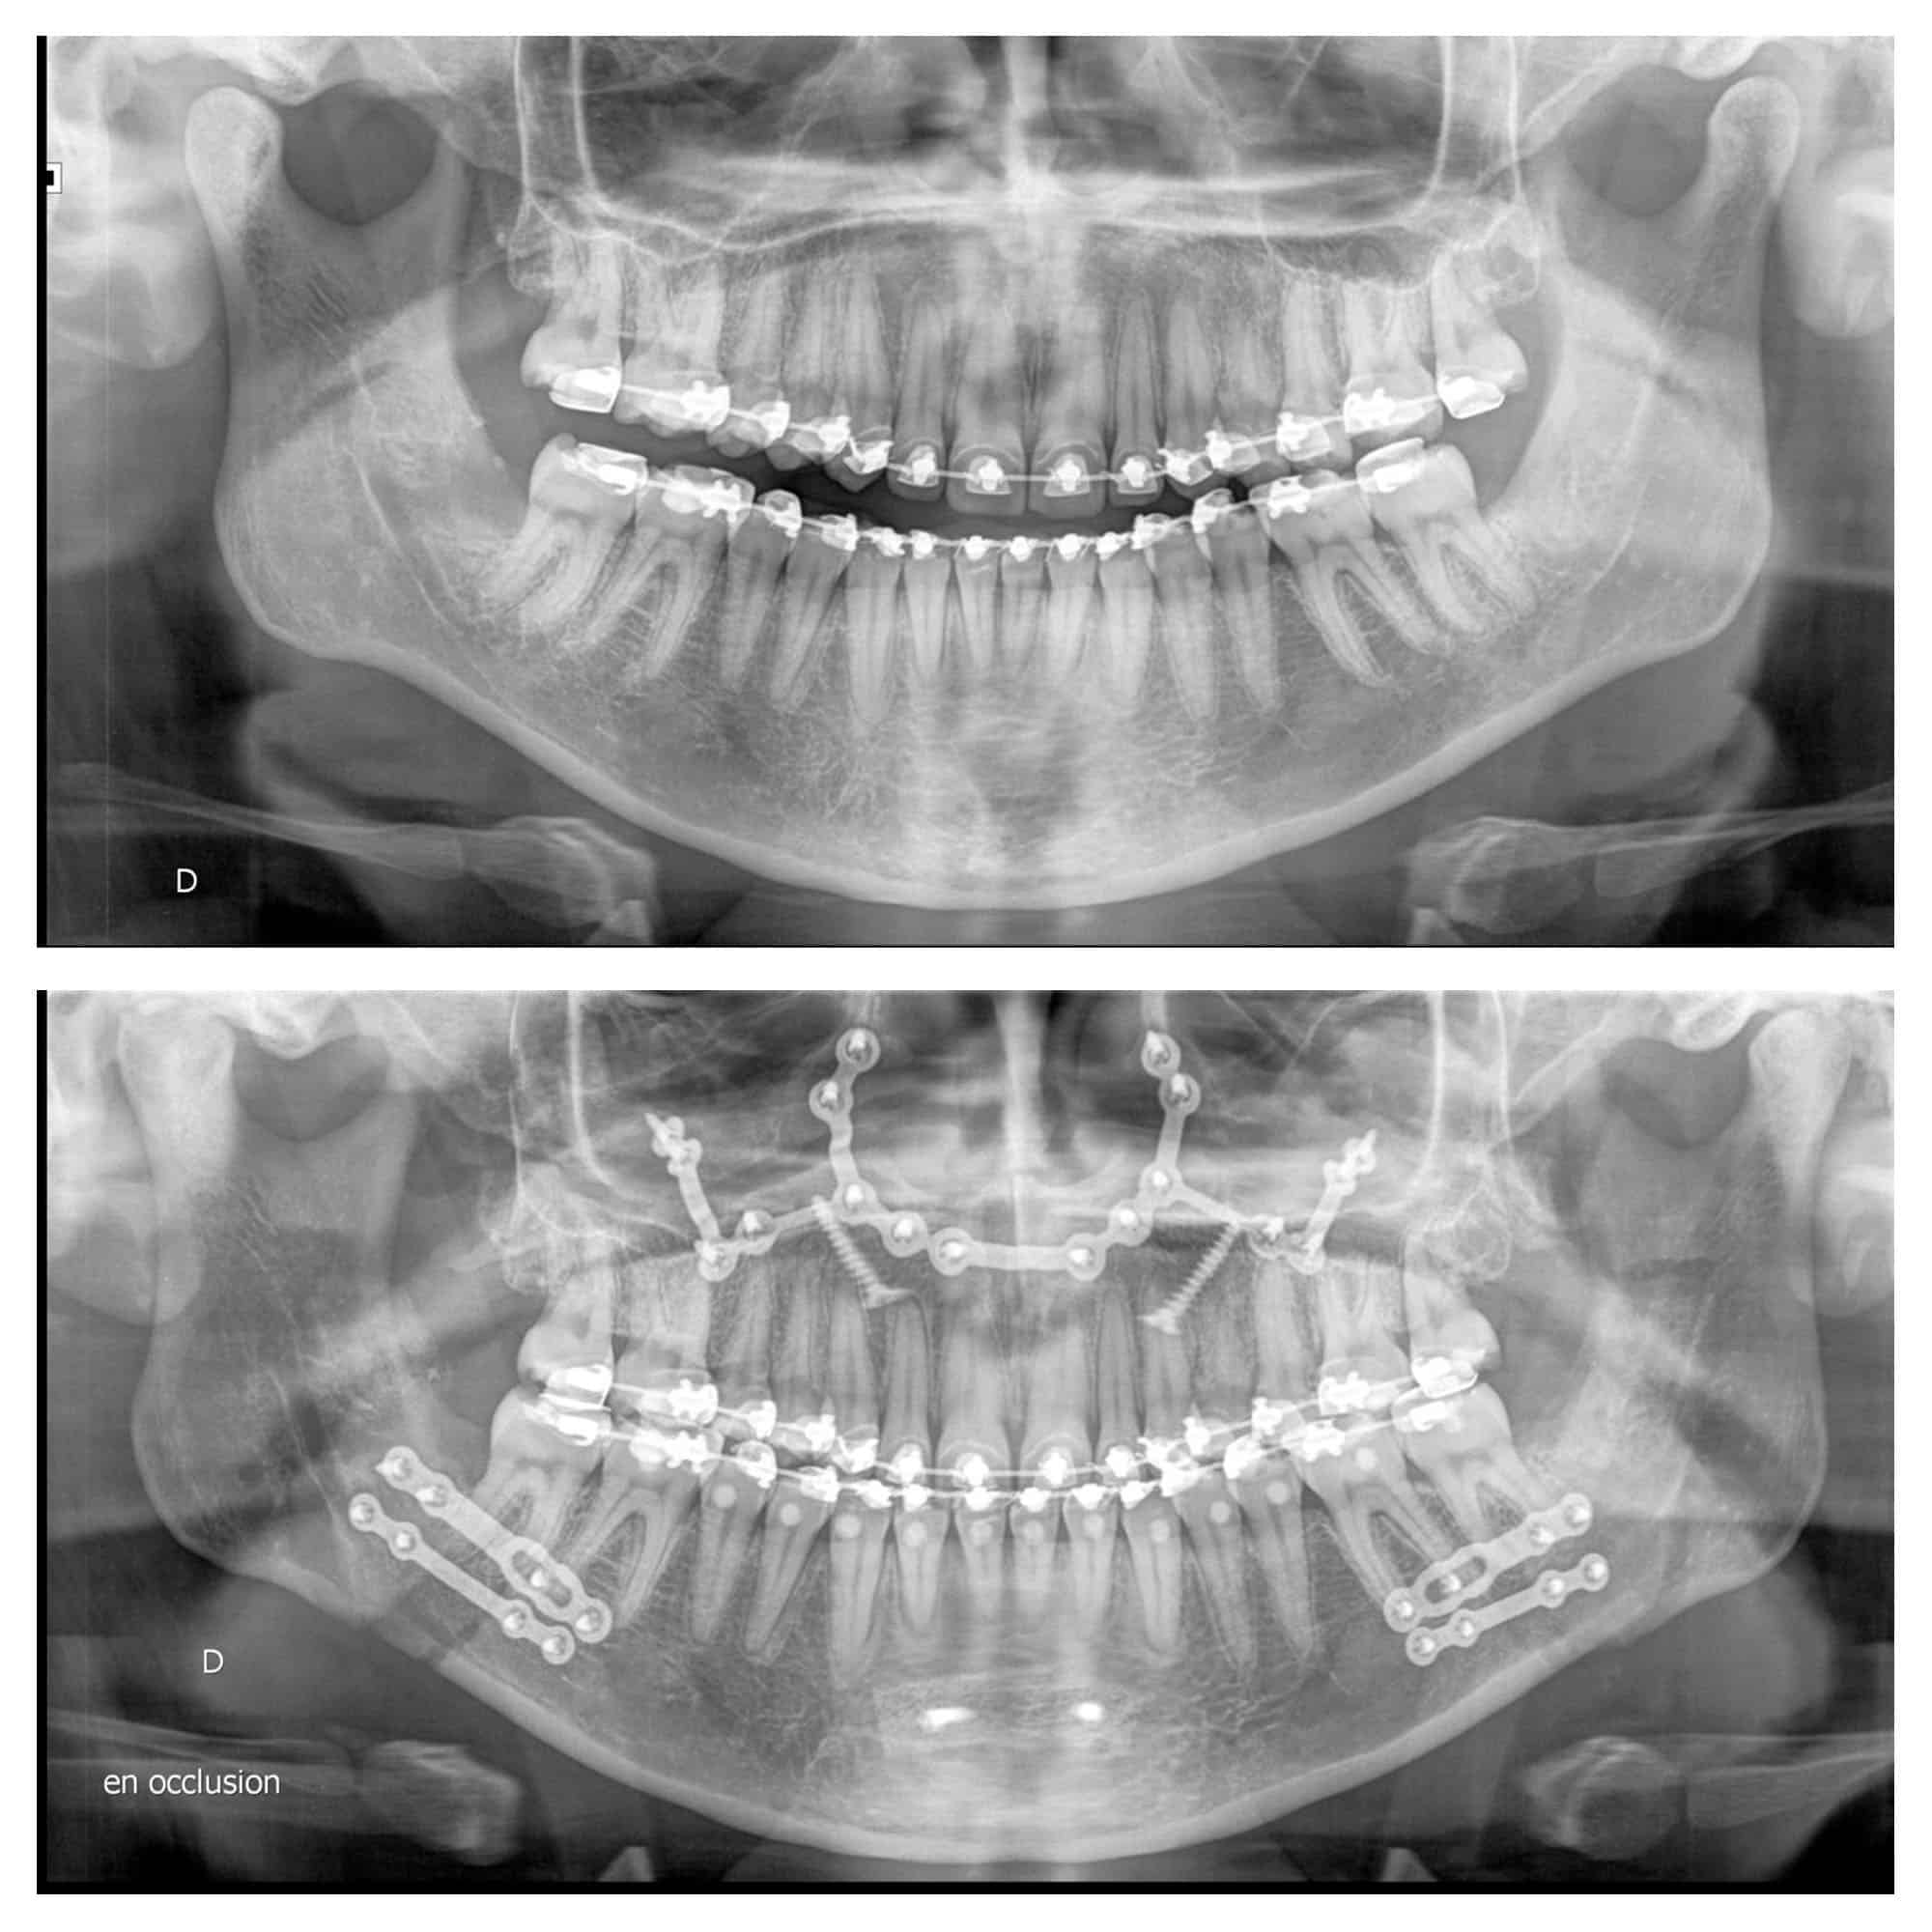 classe II radiographie radio chirurgien maxillo facial paris meilleur cas chirurgie bimaxillaire 7 radiographies avant apres